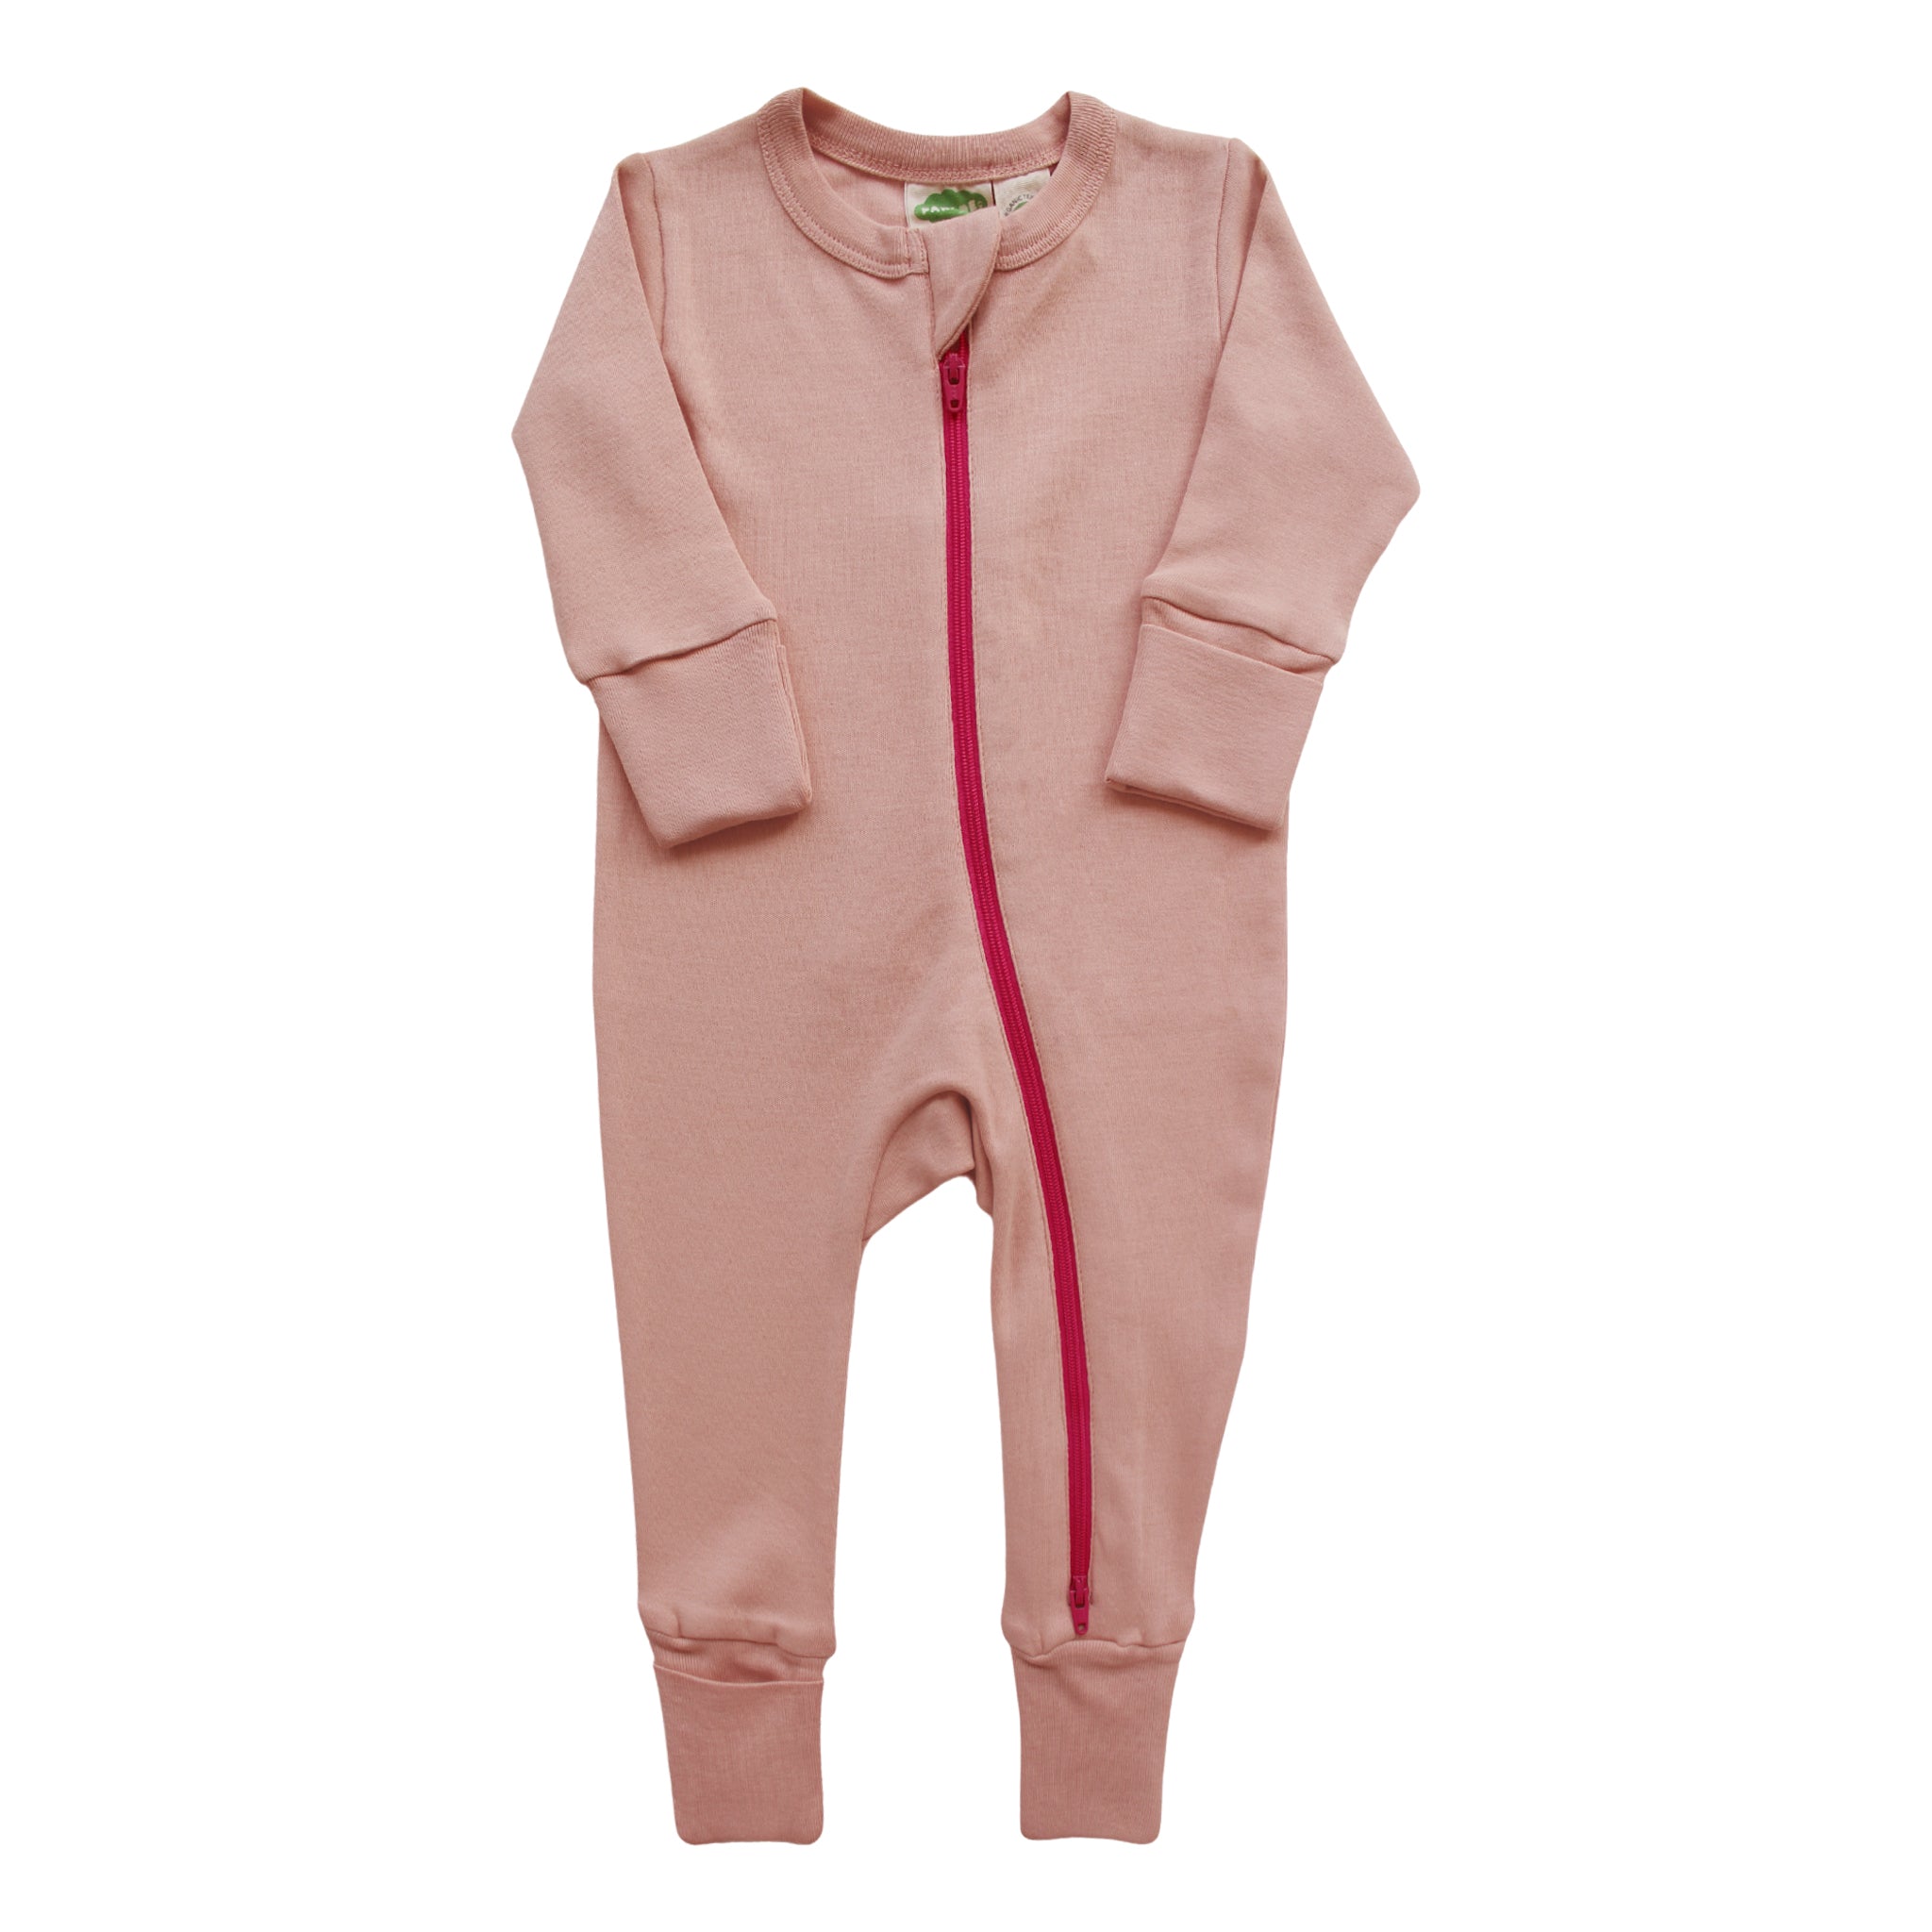 Comfy Blush Pink Ribbed Jumpsuit - Trendy Jumpsuits – Shop the Mint